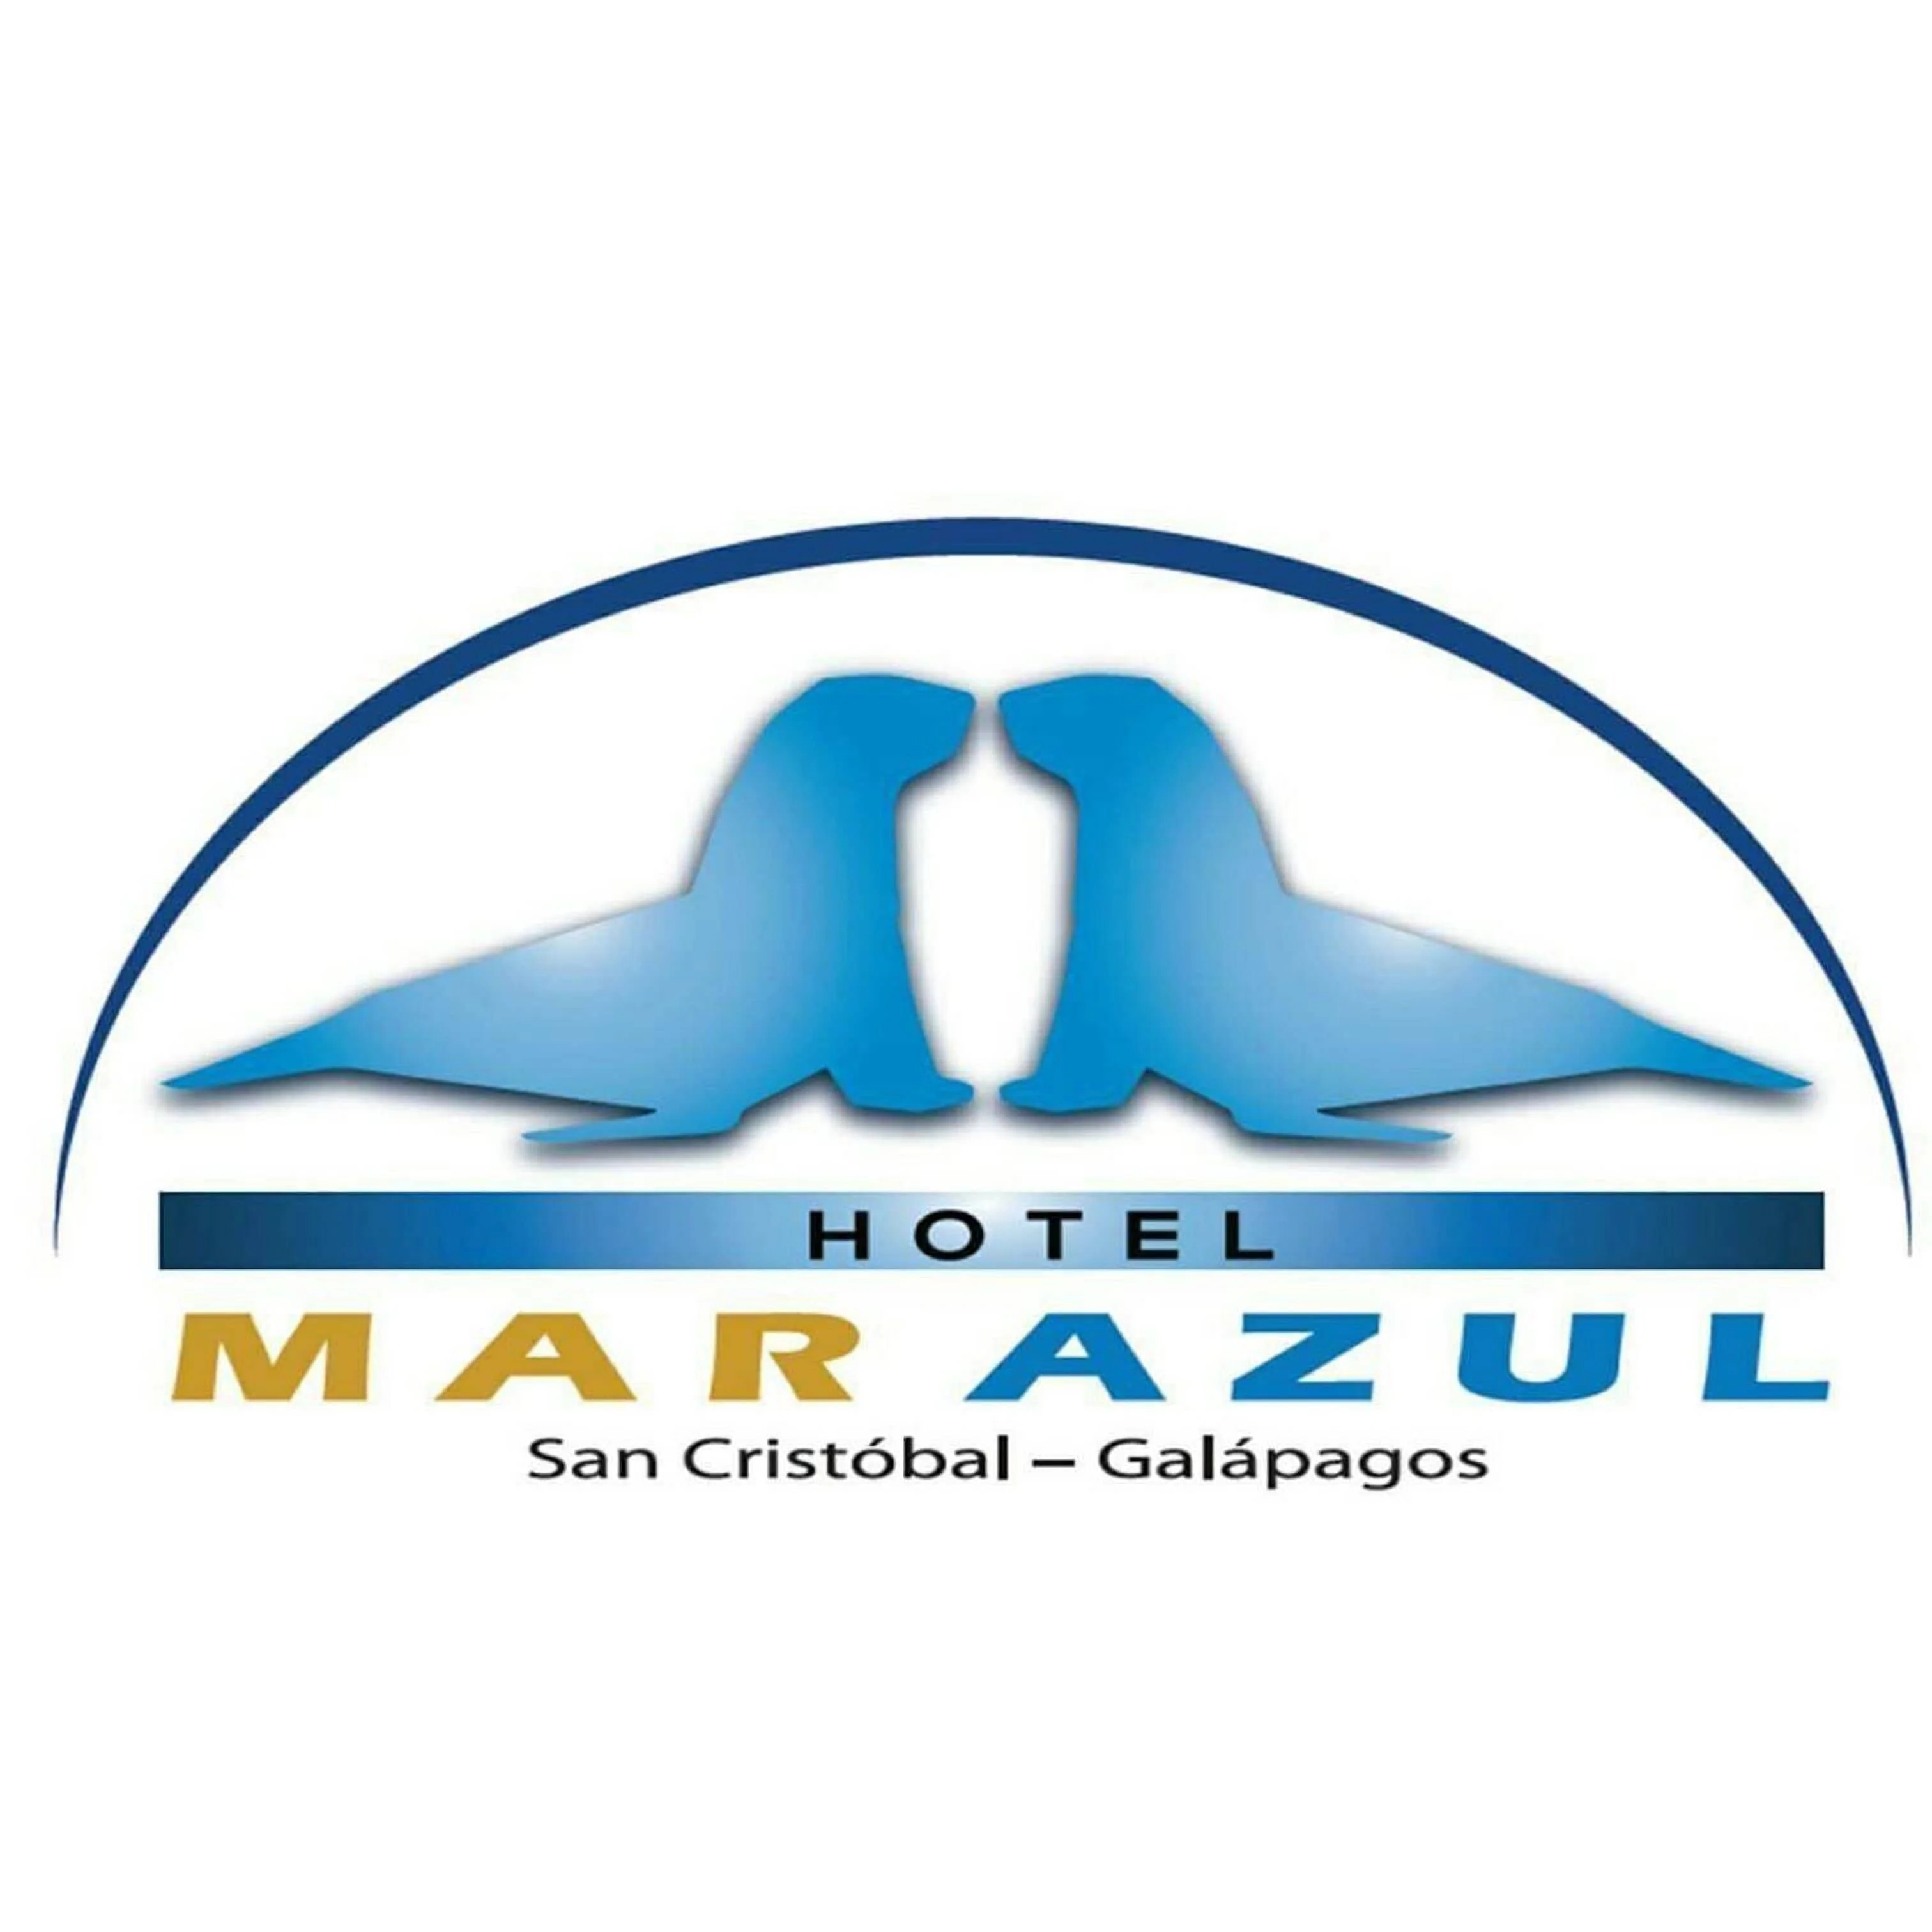 Hoteles-hotel-mar-azul-galapagos-13822